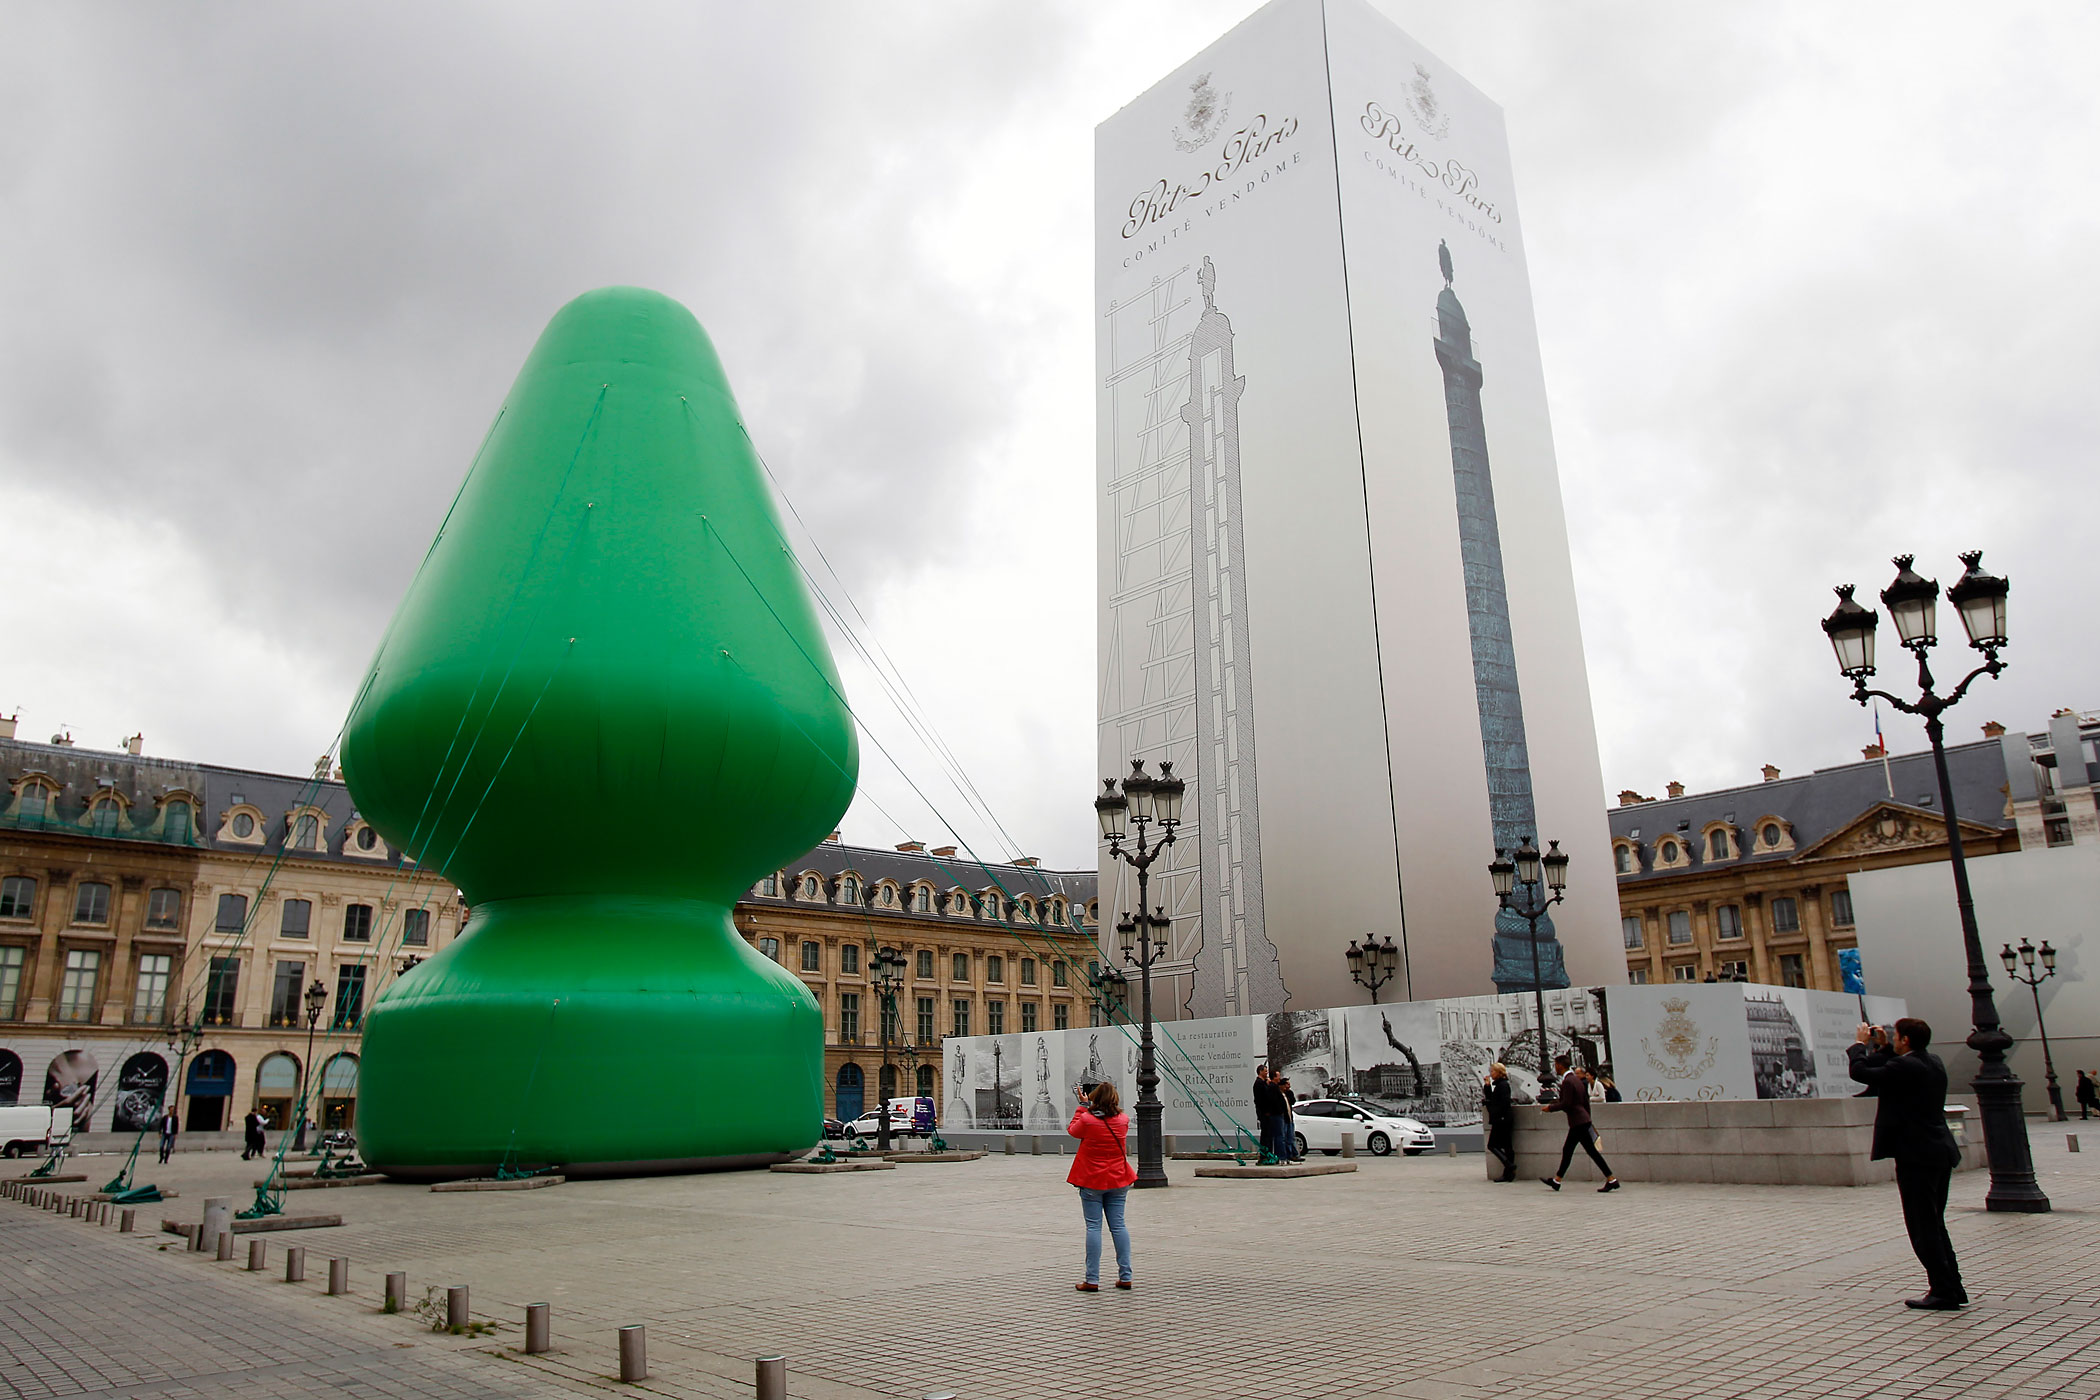 'Tree' By Paul McCarthy - Monumental Artwork At Place Vendome In Paris